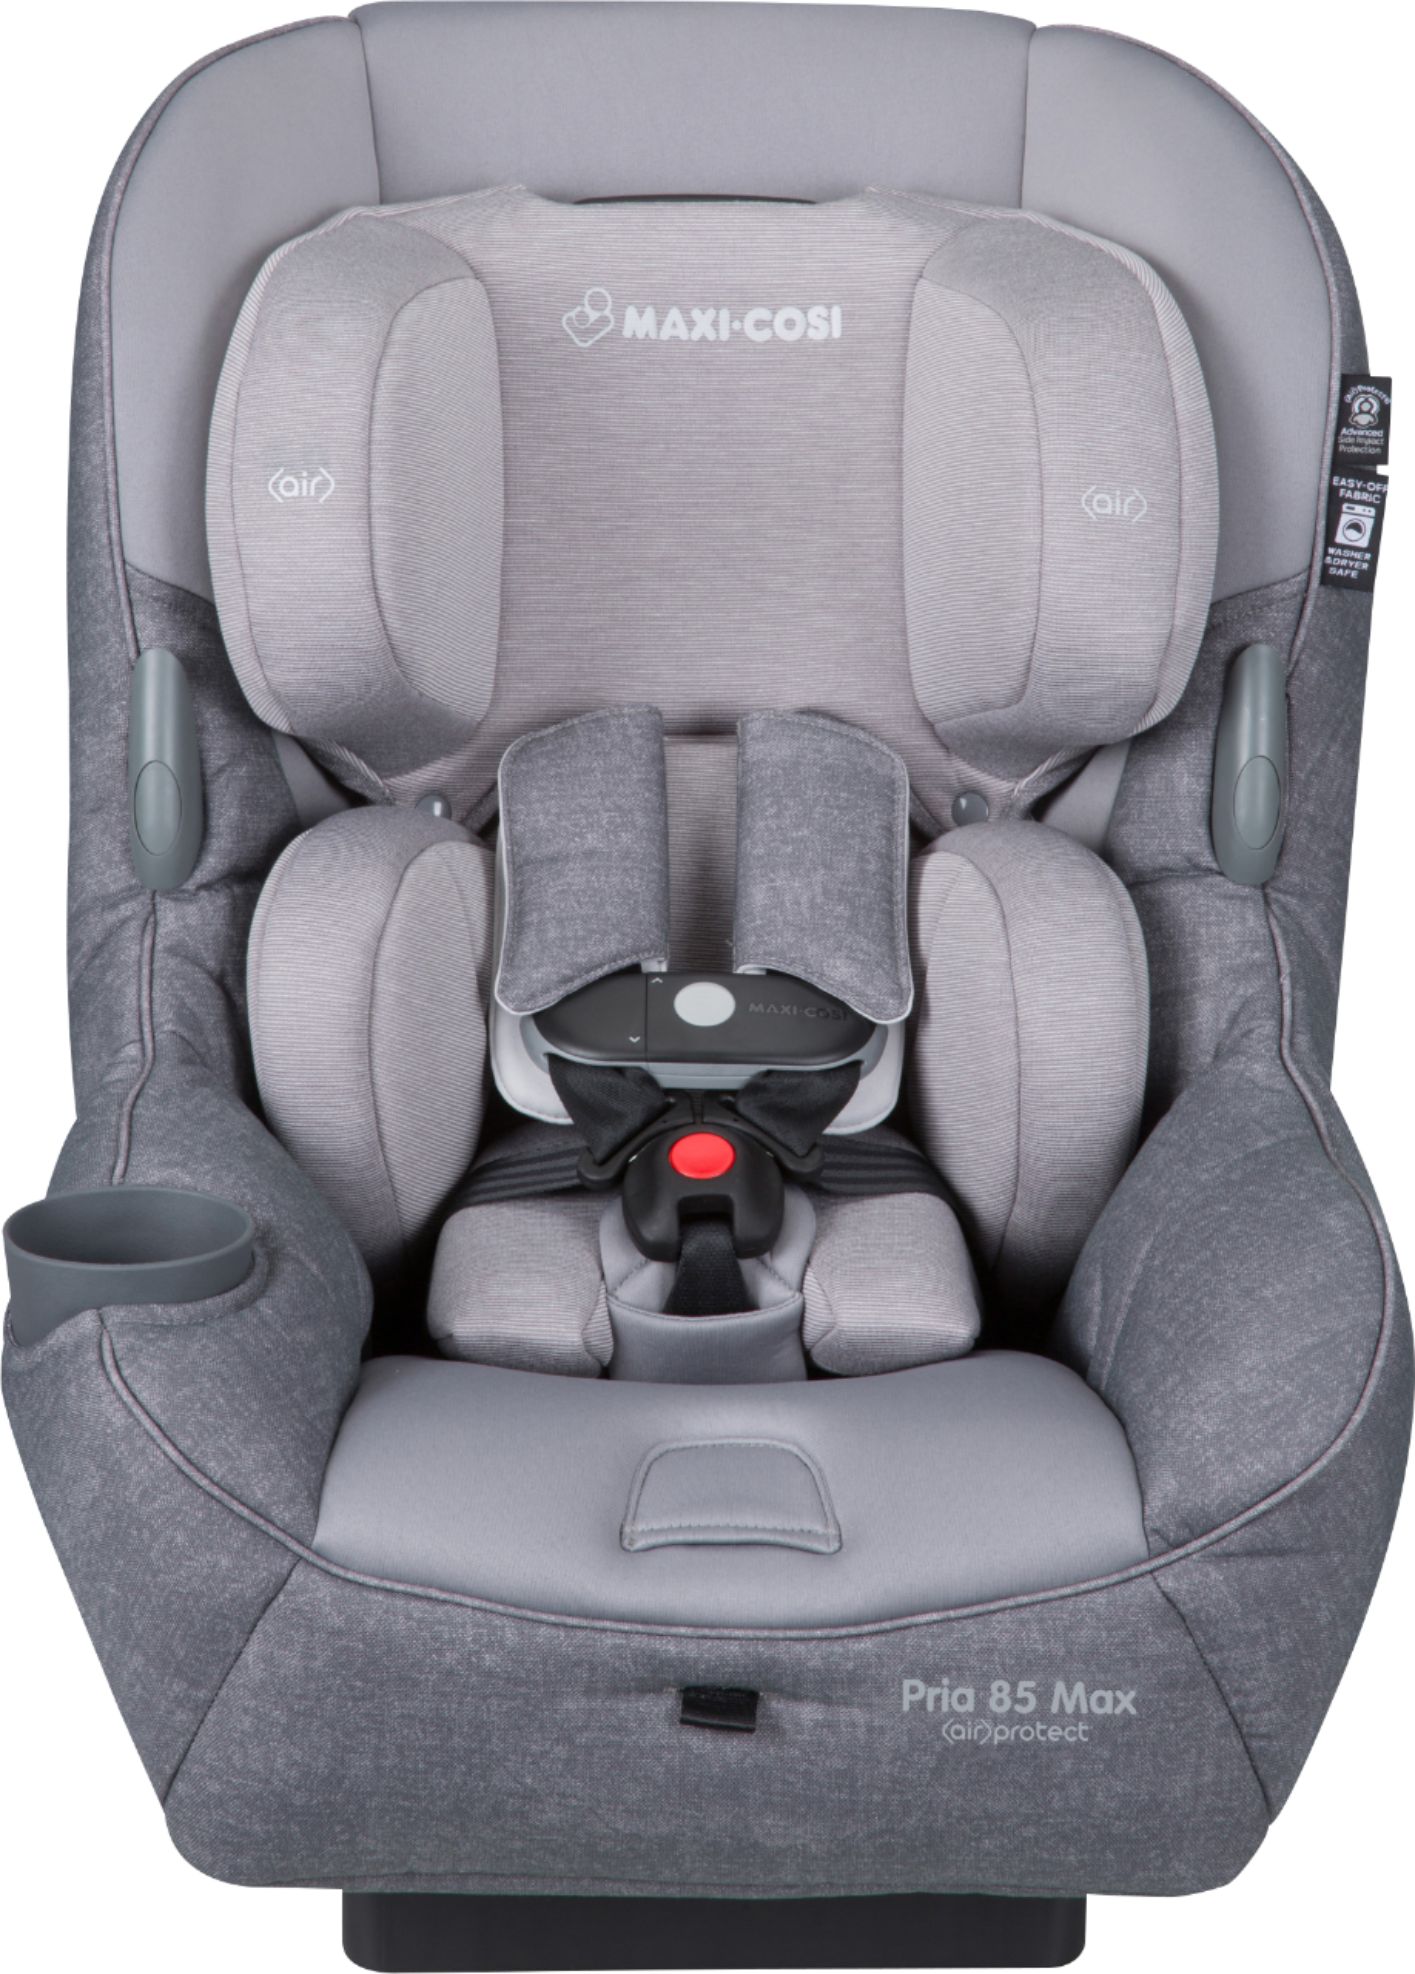 How long is a maxi cosi car seat good for Maxi Cosi Pria 85 Max Convertible Car Seat Black Cc212etl Best Buy